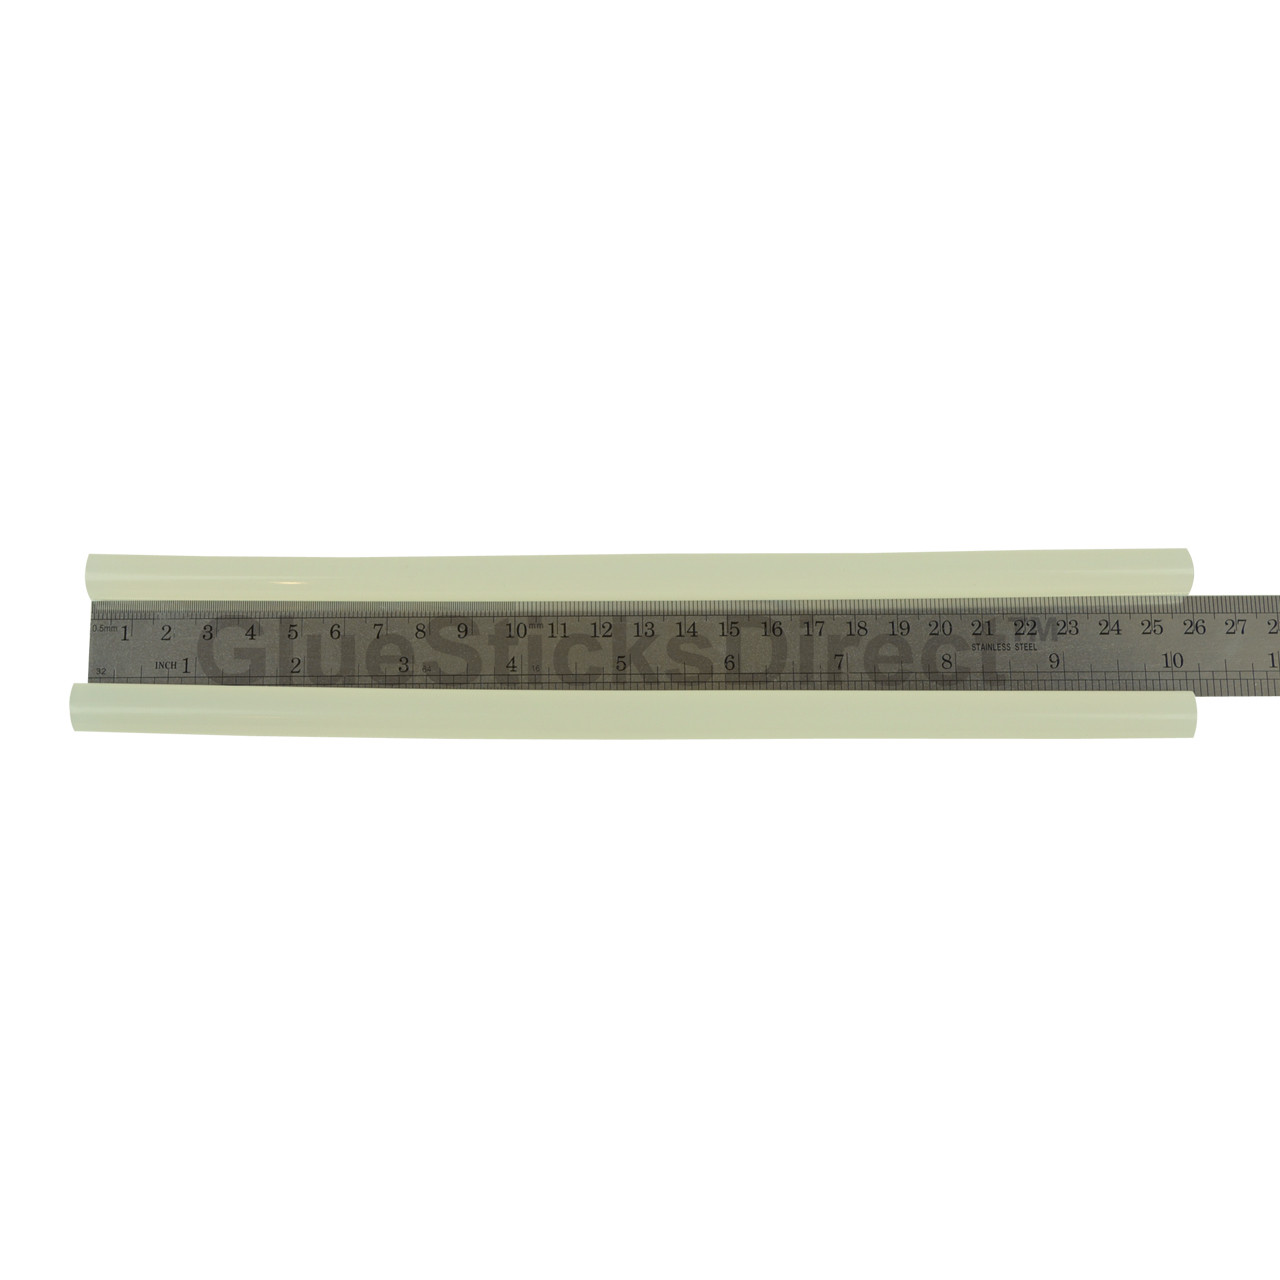 GlueSticksDirect Economy® Hot Melt Glue Sticks 7/16" X 10" 25 lbs Bulk